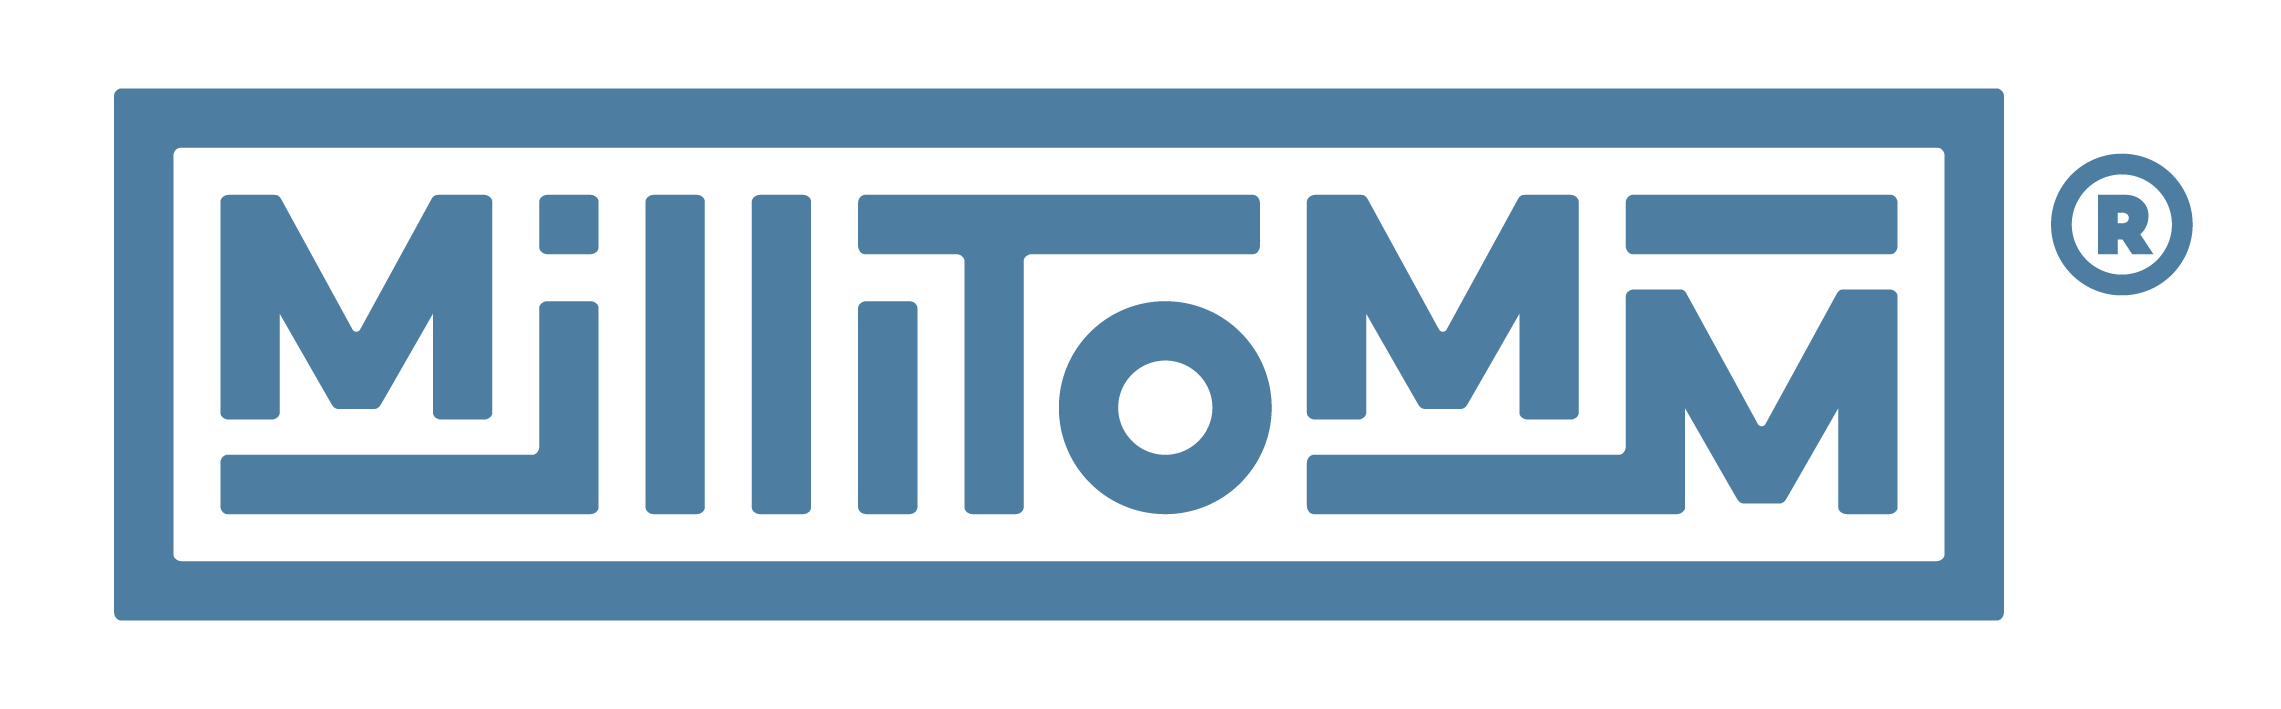 MilliTomm GmbH